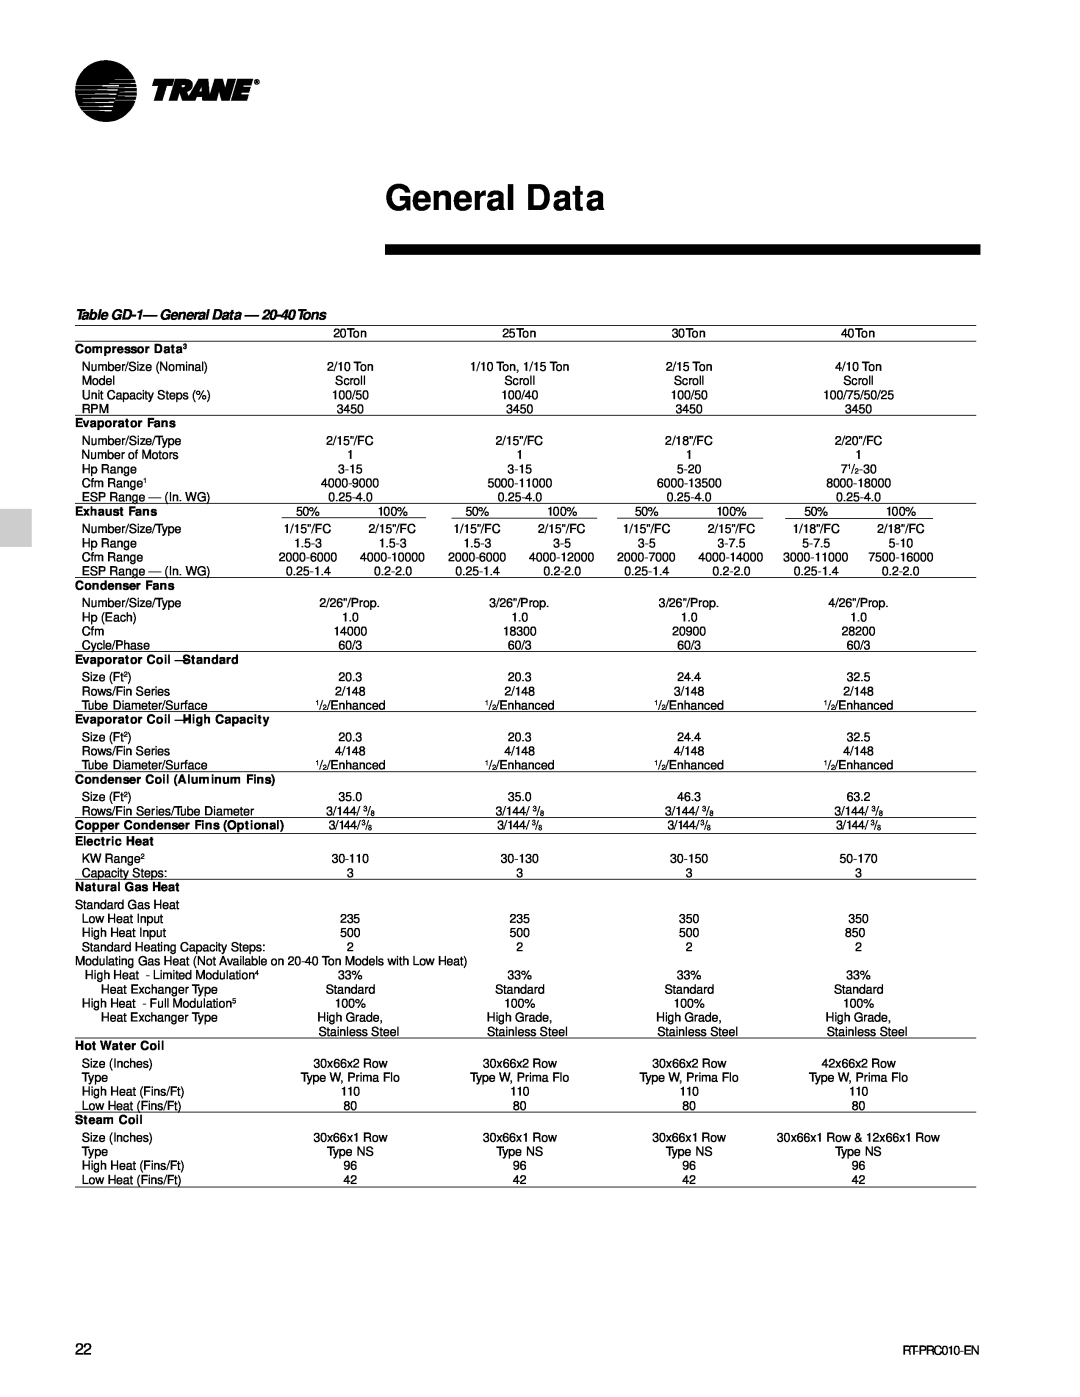 Trane RT-PRC010-EN manual Table GD-1-General Data - 20-40Tons 